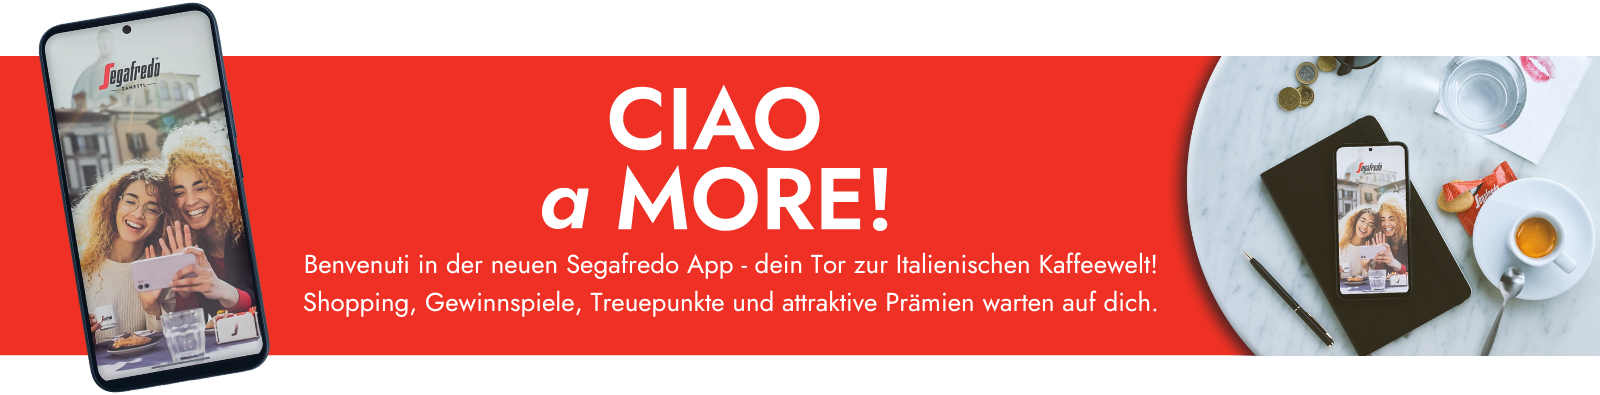 segafredo-club-app-banner